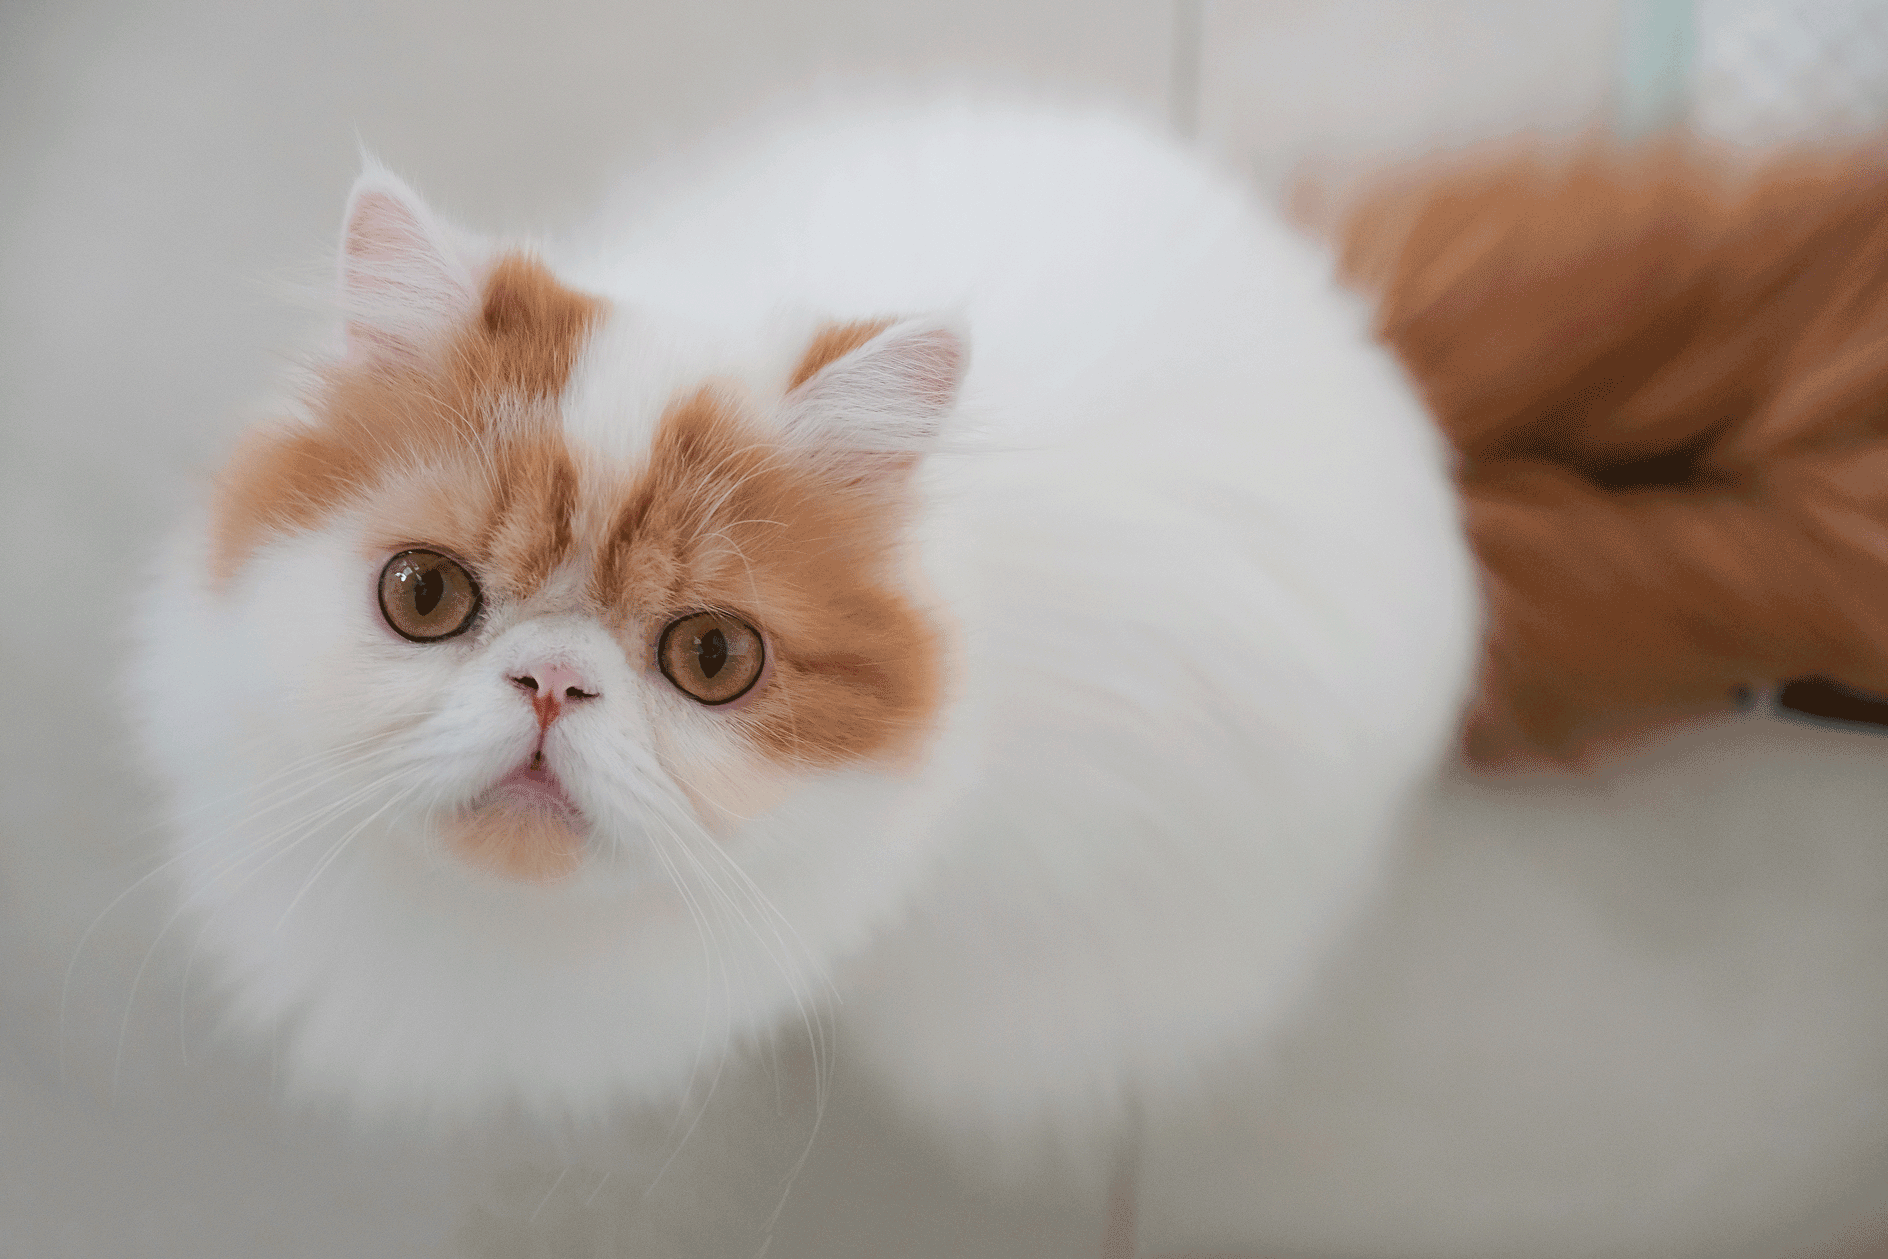 kucing persia peak nose